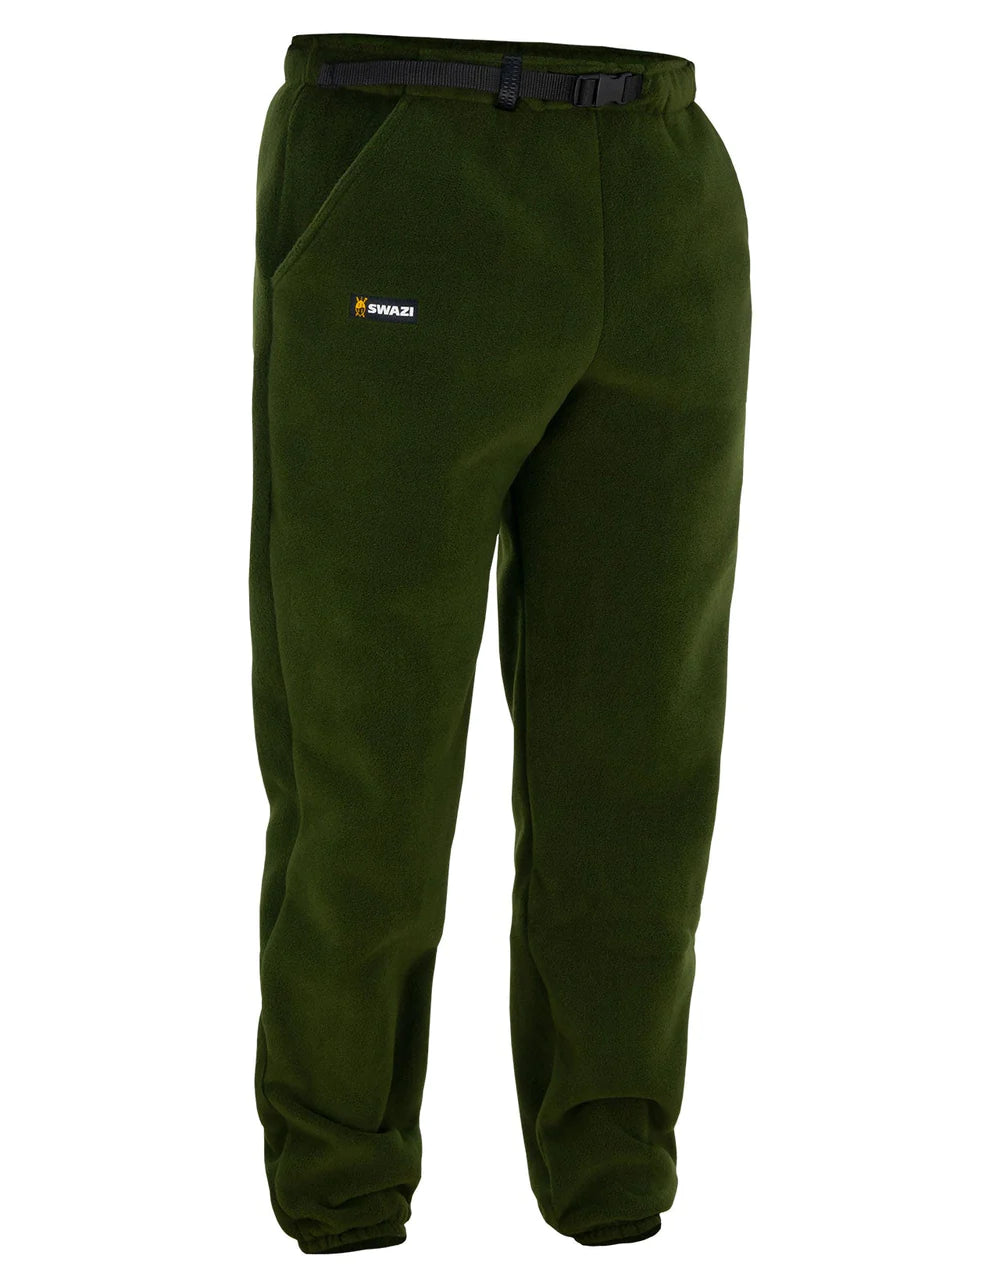 Swazi Bush Pants - S / BLACK - Mansfield Hunting & Fishing - Products to prepare for Corona Virus